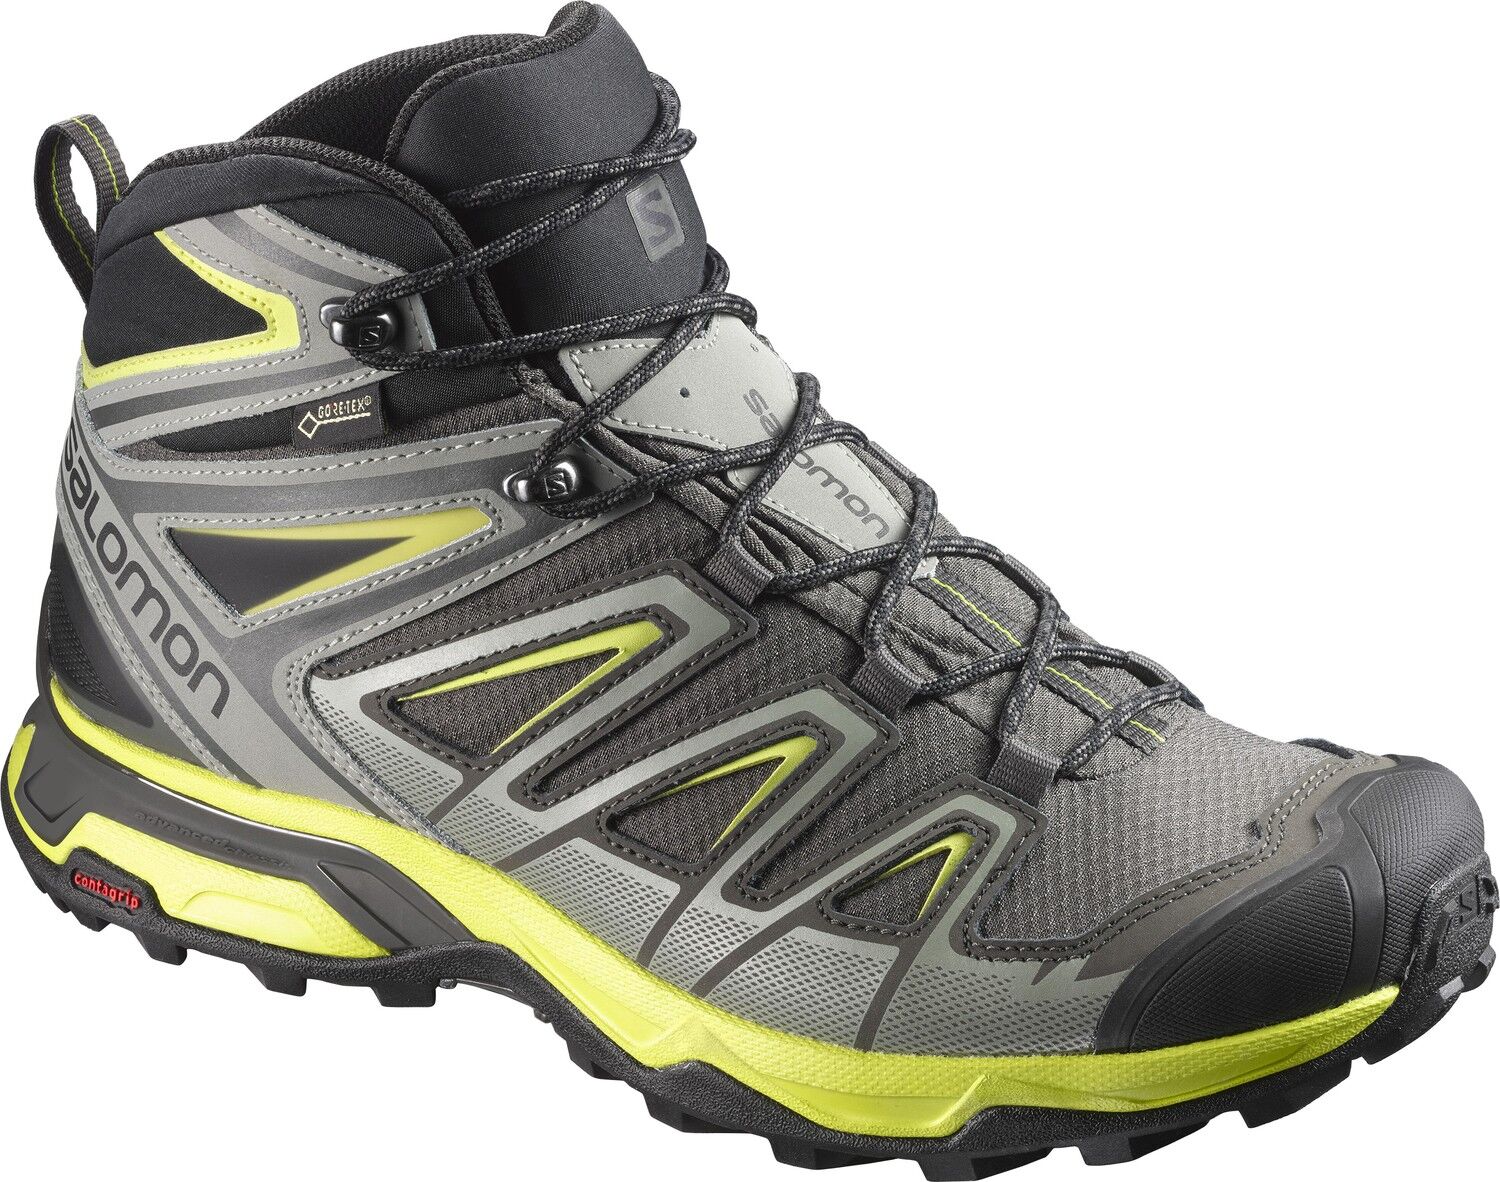 Salomon - X Ultra 3 Mid GTX® - Walking Boots - Men's